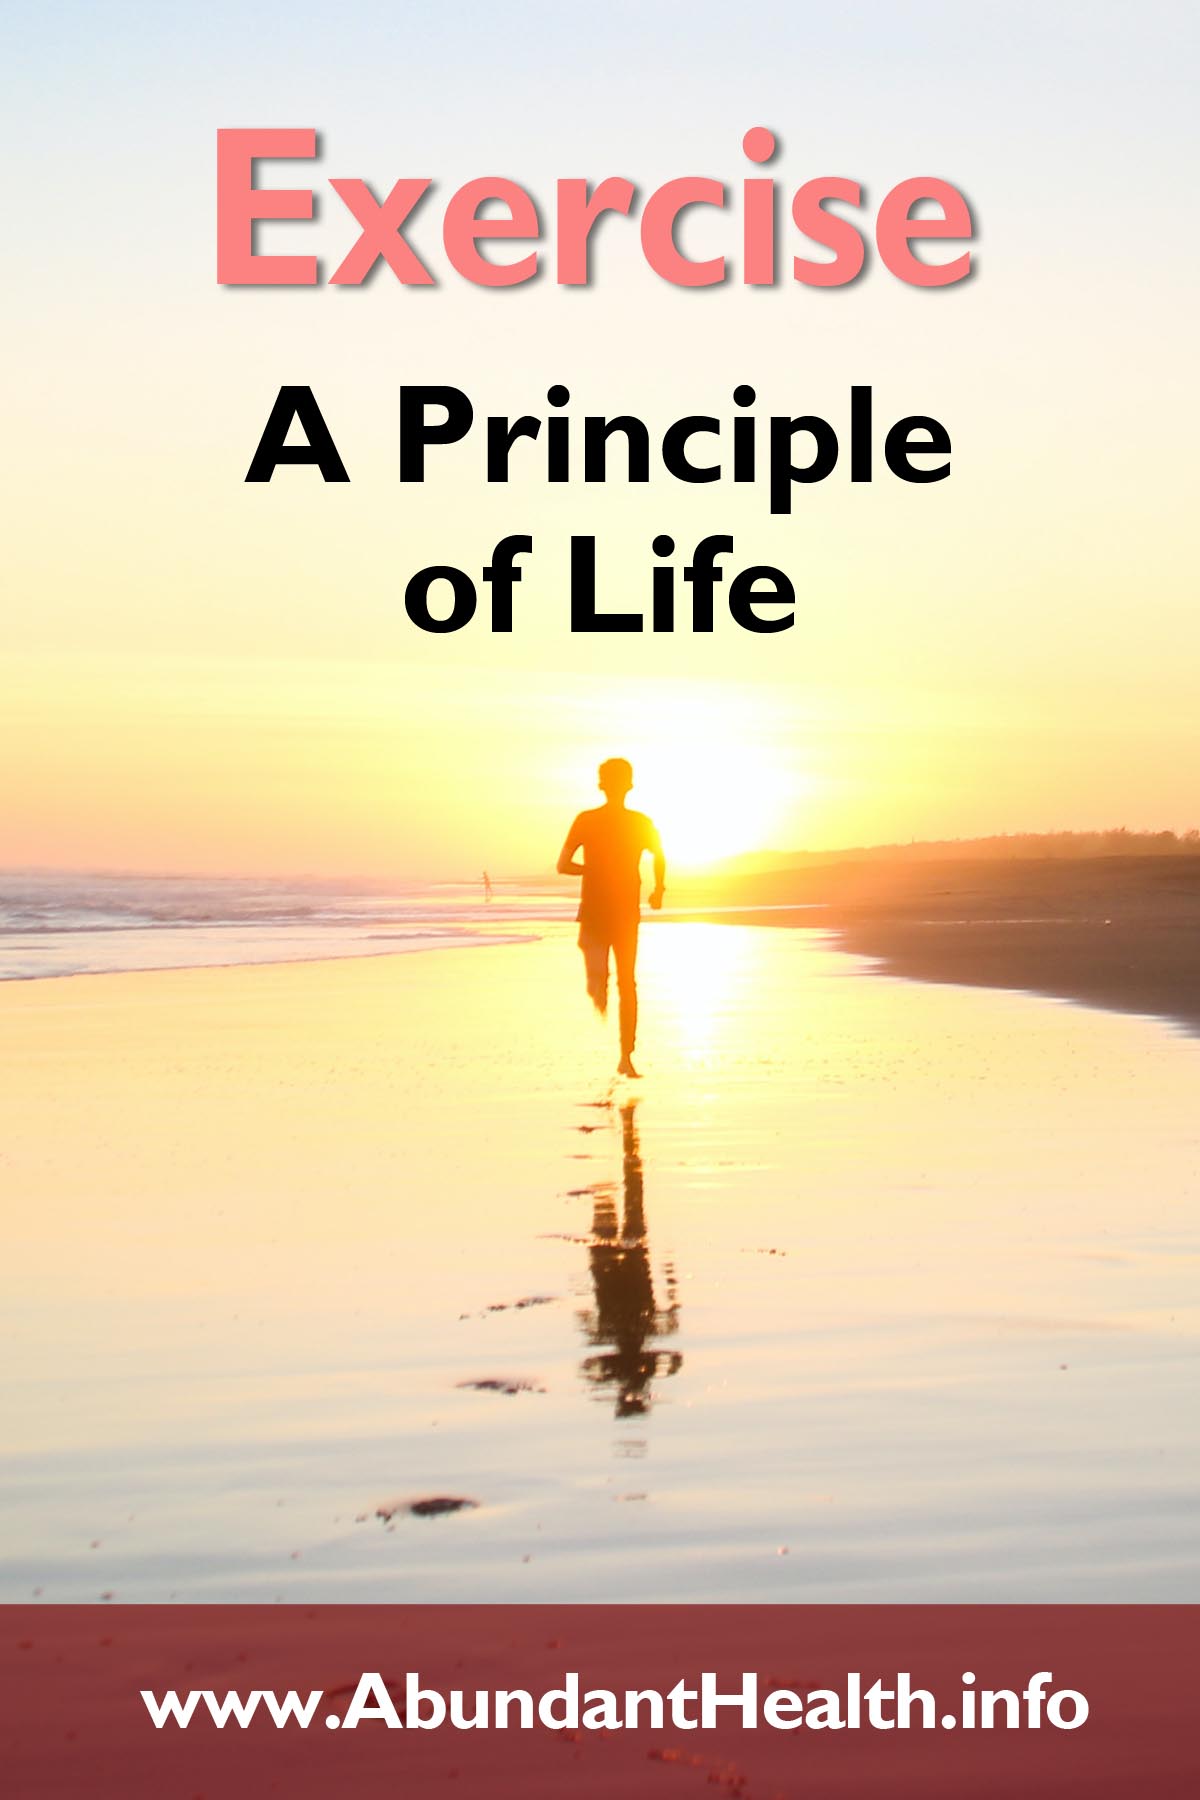 Exercise - A Principle of Life